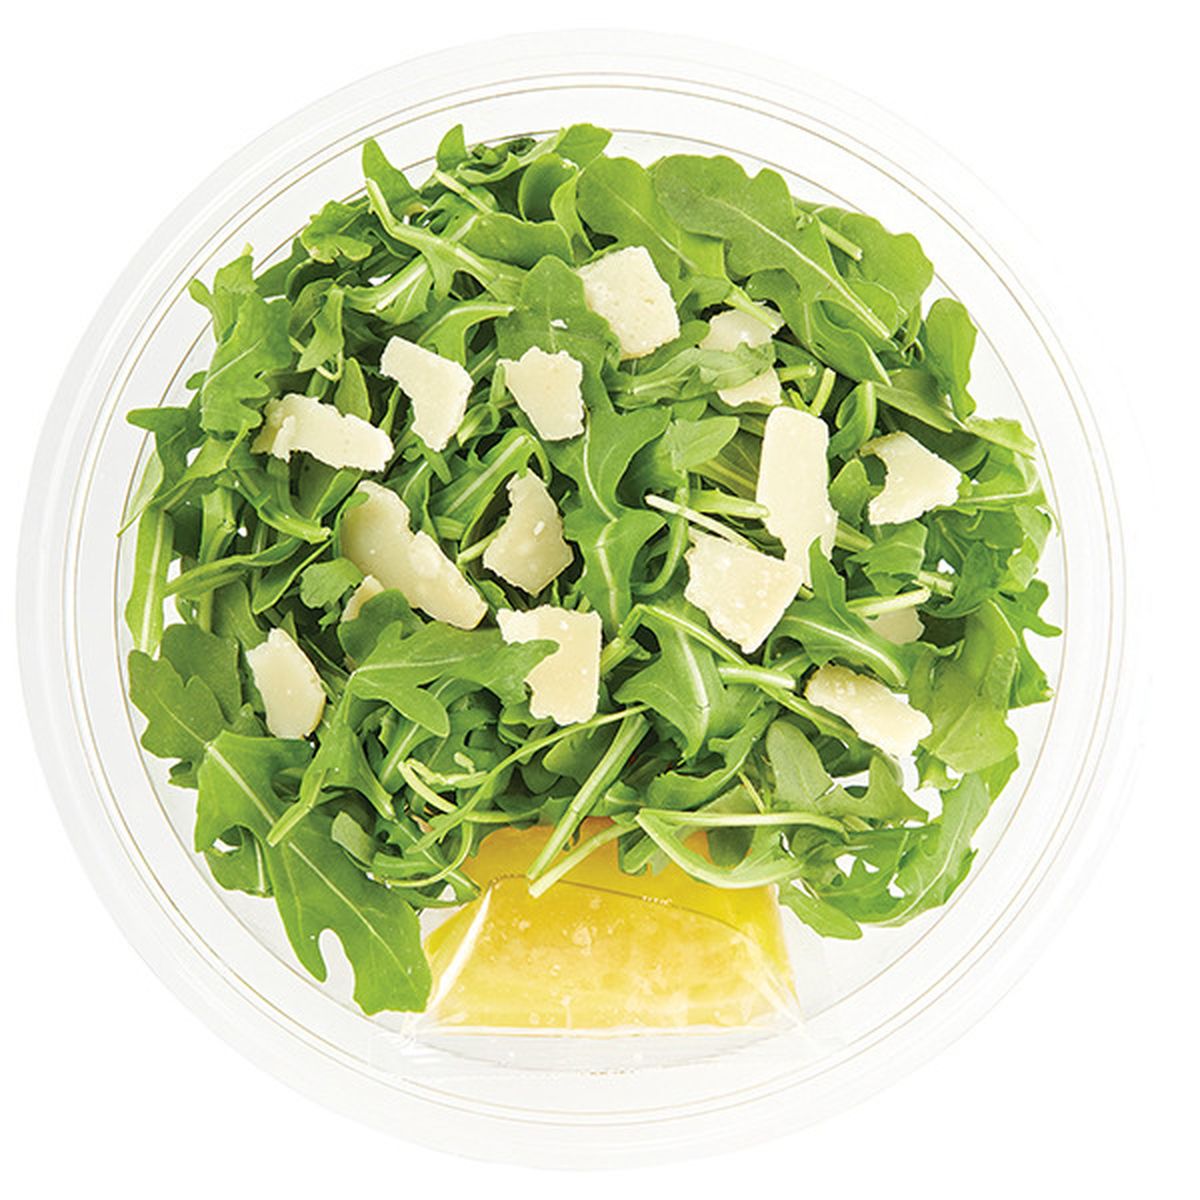 Calories in Wegmans Regular Arugula Salad with Lemon Dressing